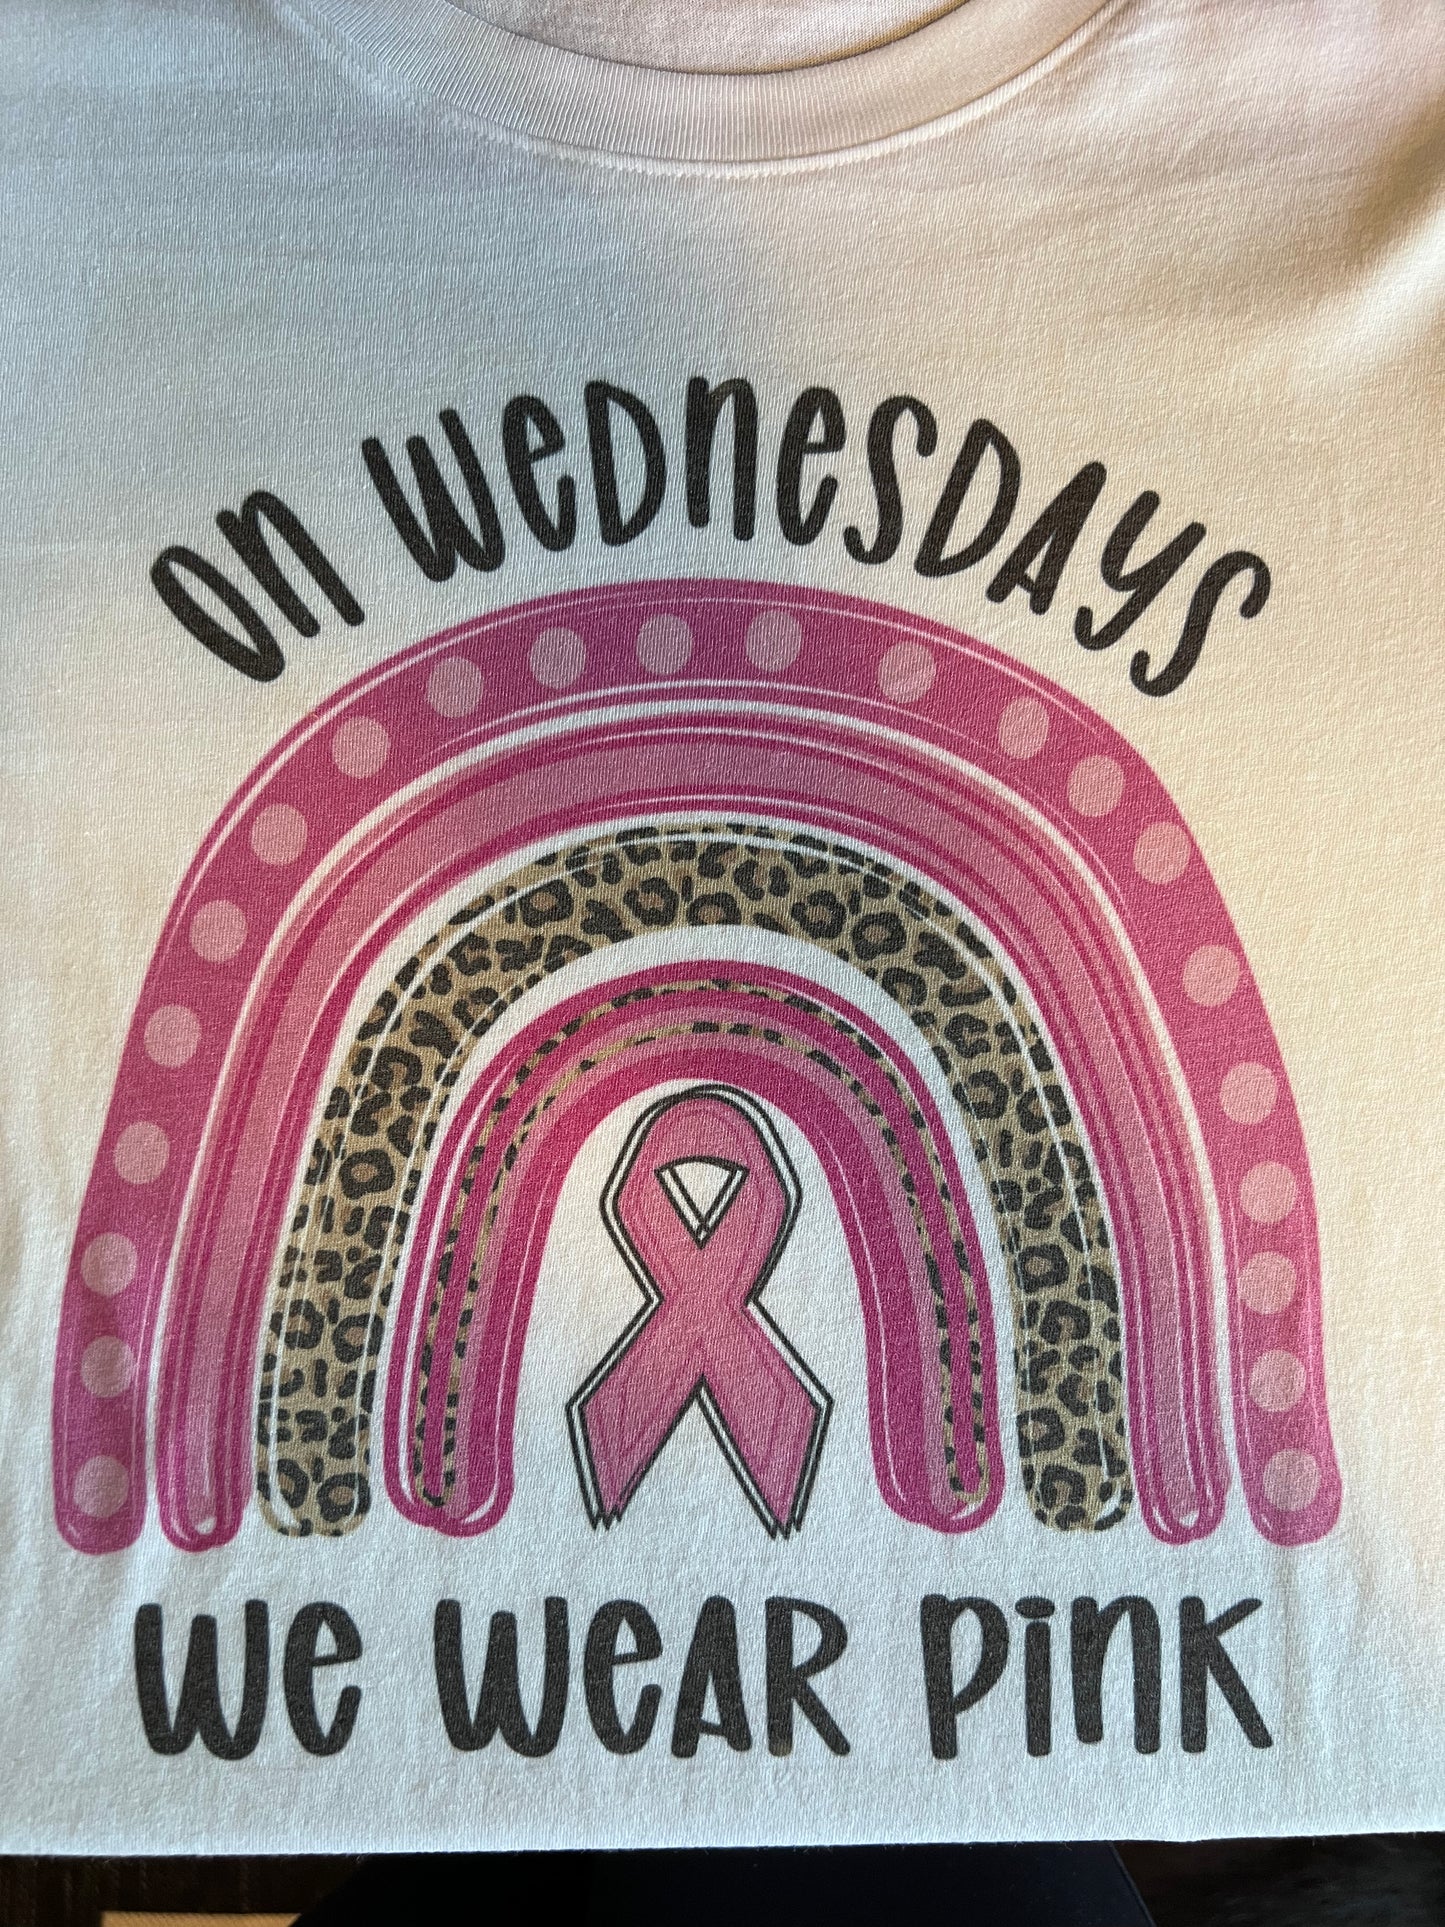 On Wednesdays We wear PINK breast cancer rainbow shirt